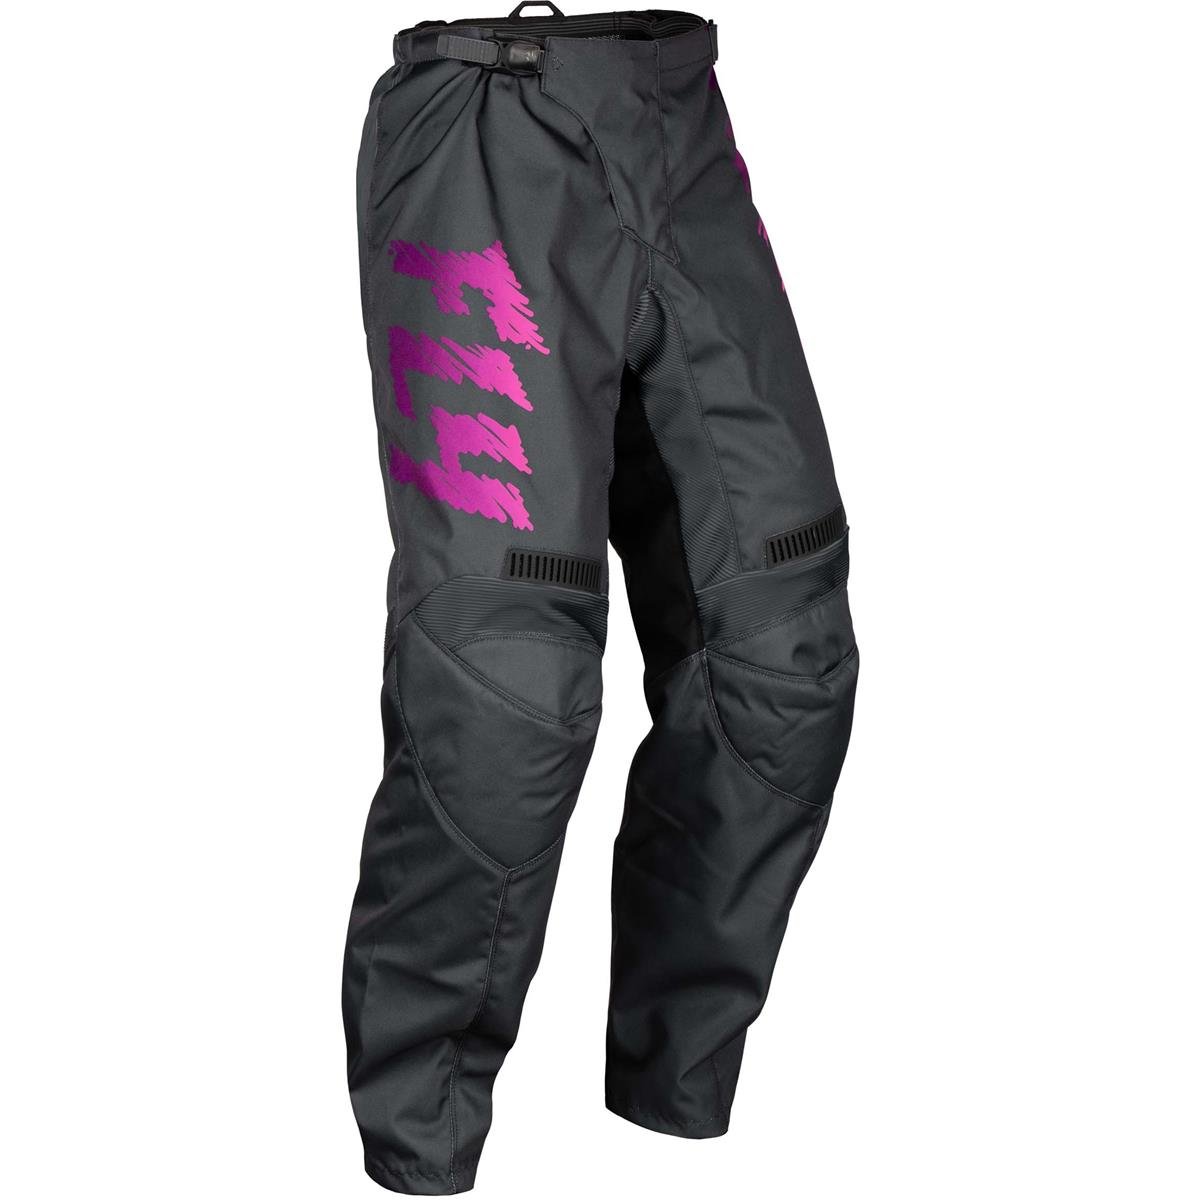 Fly Racing Pantaloni MX per Bambini F-16 Youth Grigio/Charcoal/Pink